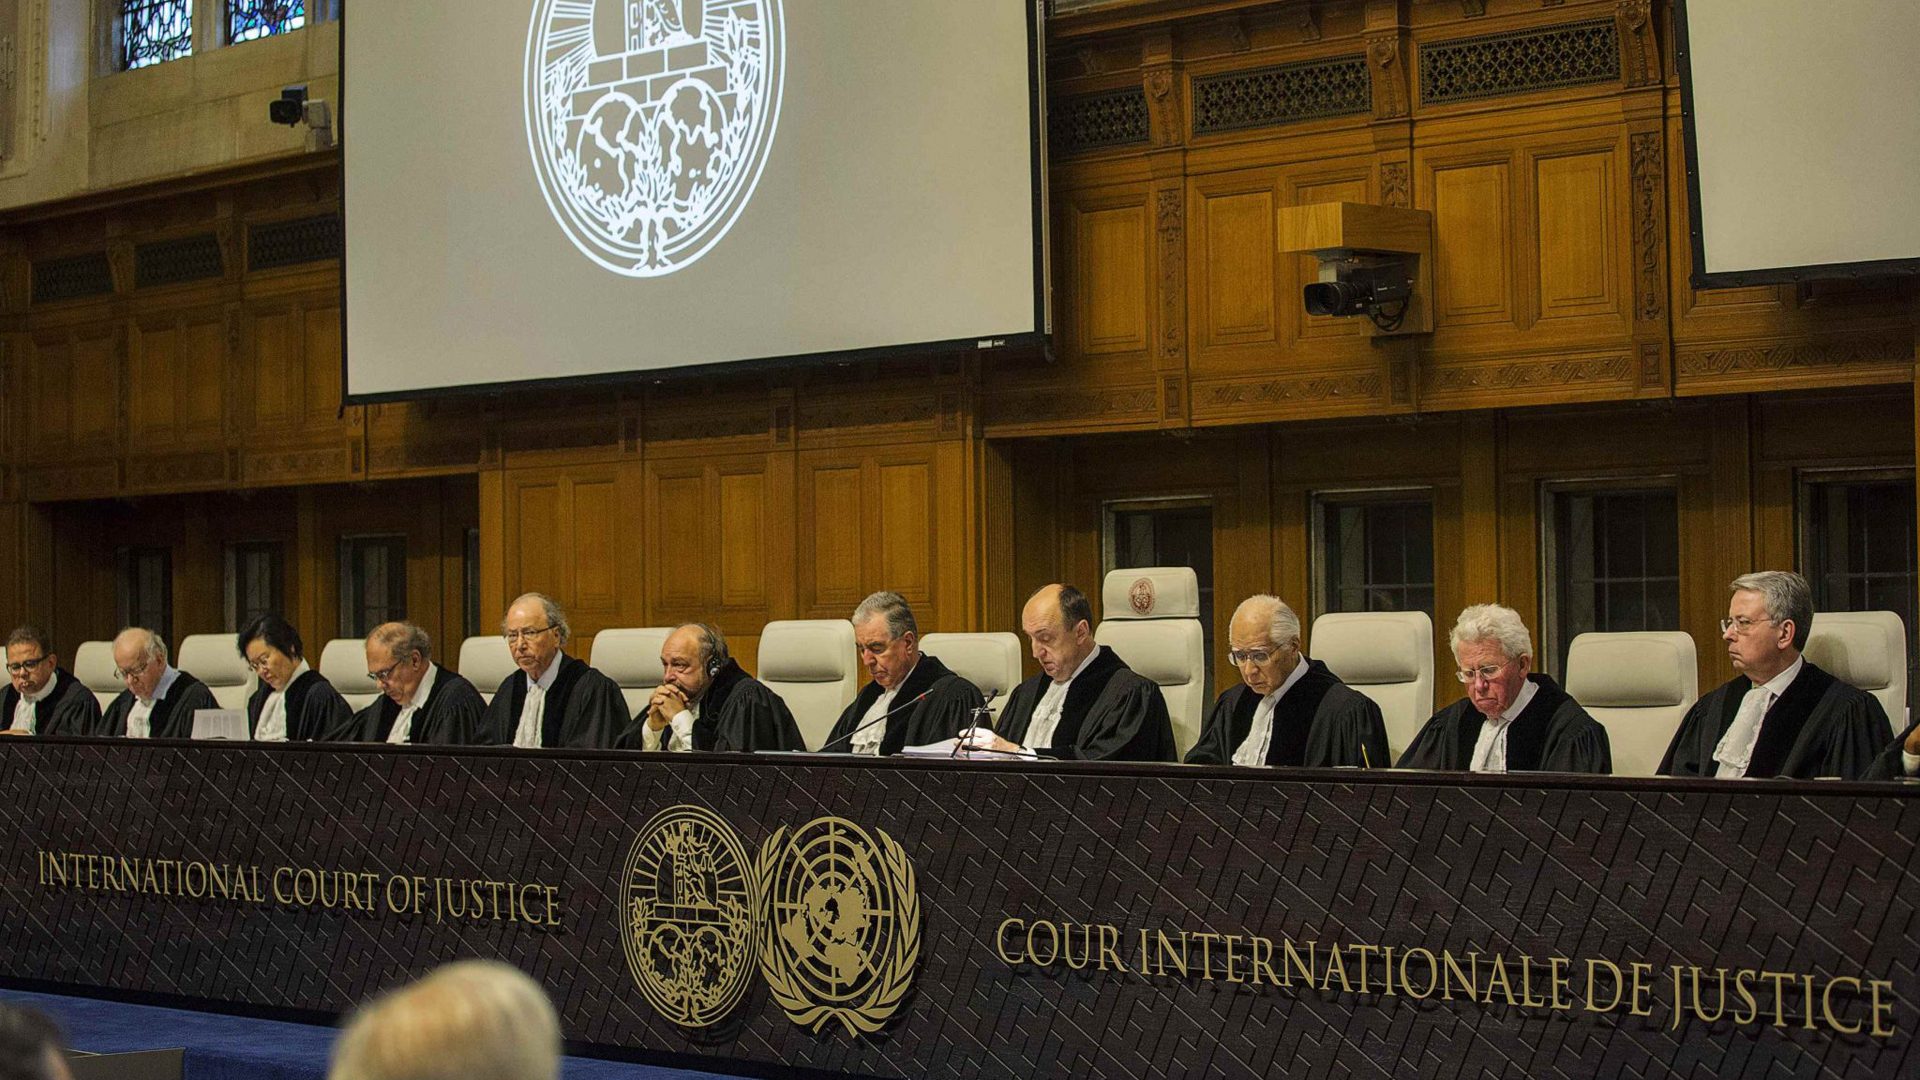 Международный уголовный трибунал. Международный суд в Гааге. International Justice Court Международный суд. Международный трибунал в Гааге. Международный Уголовный трибунал (Гаага).